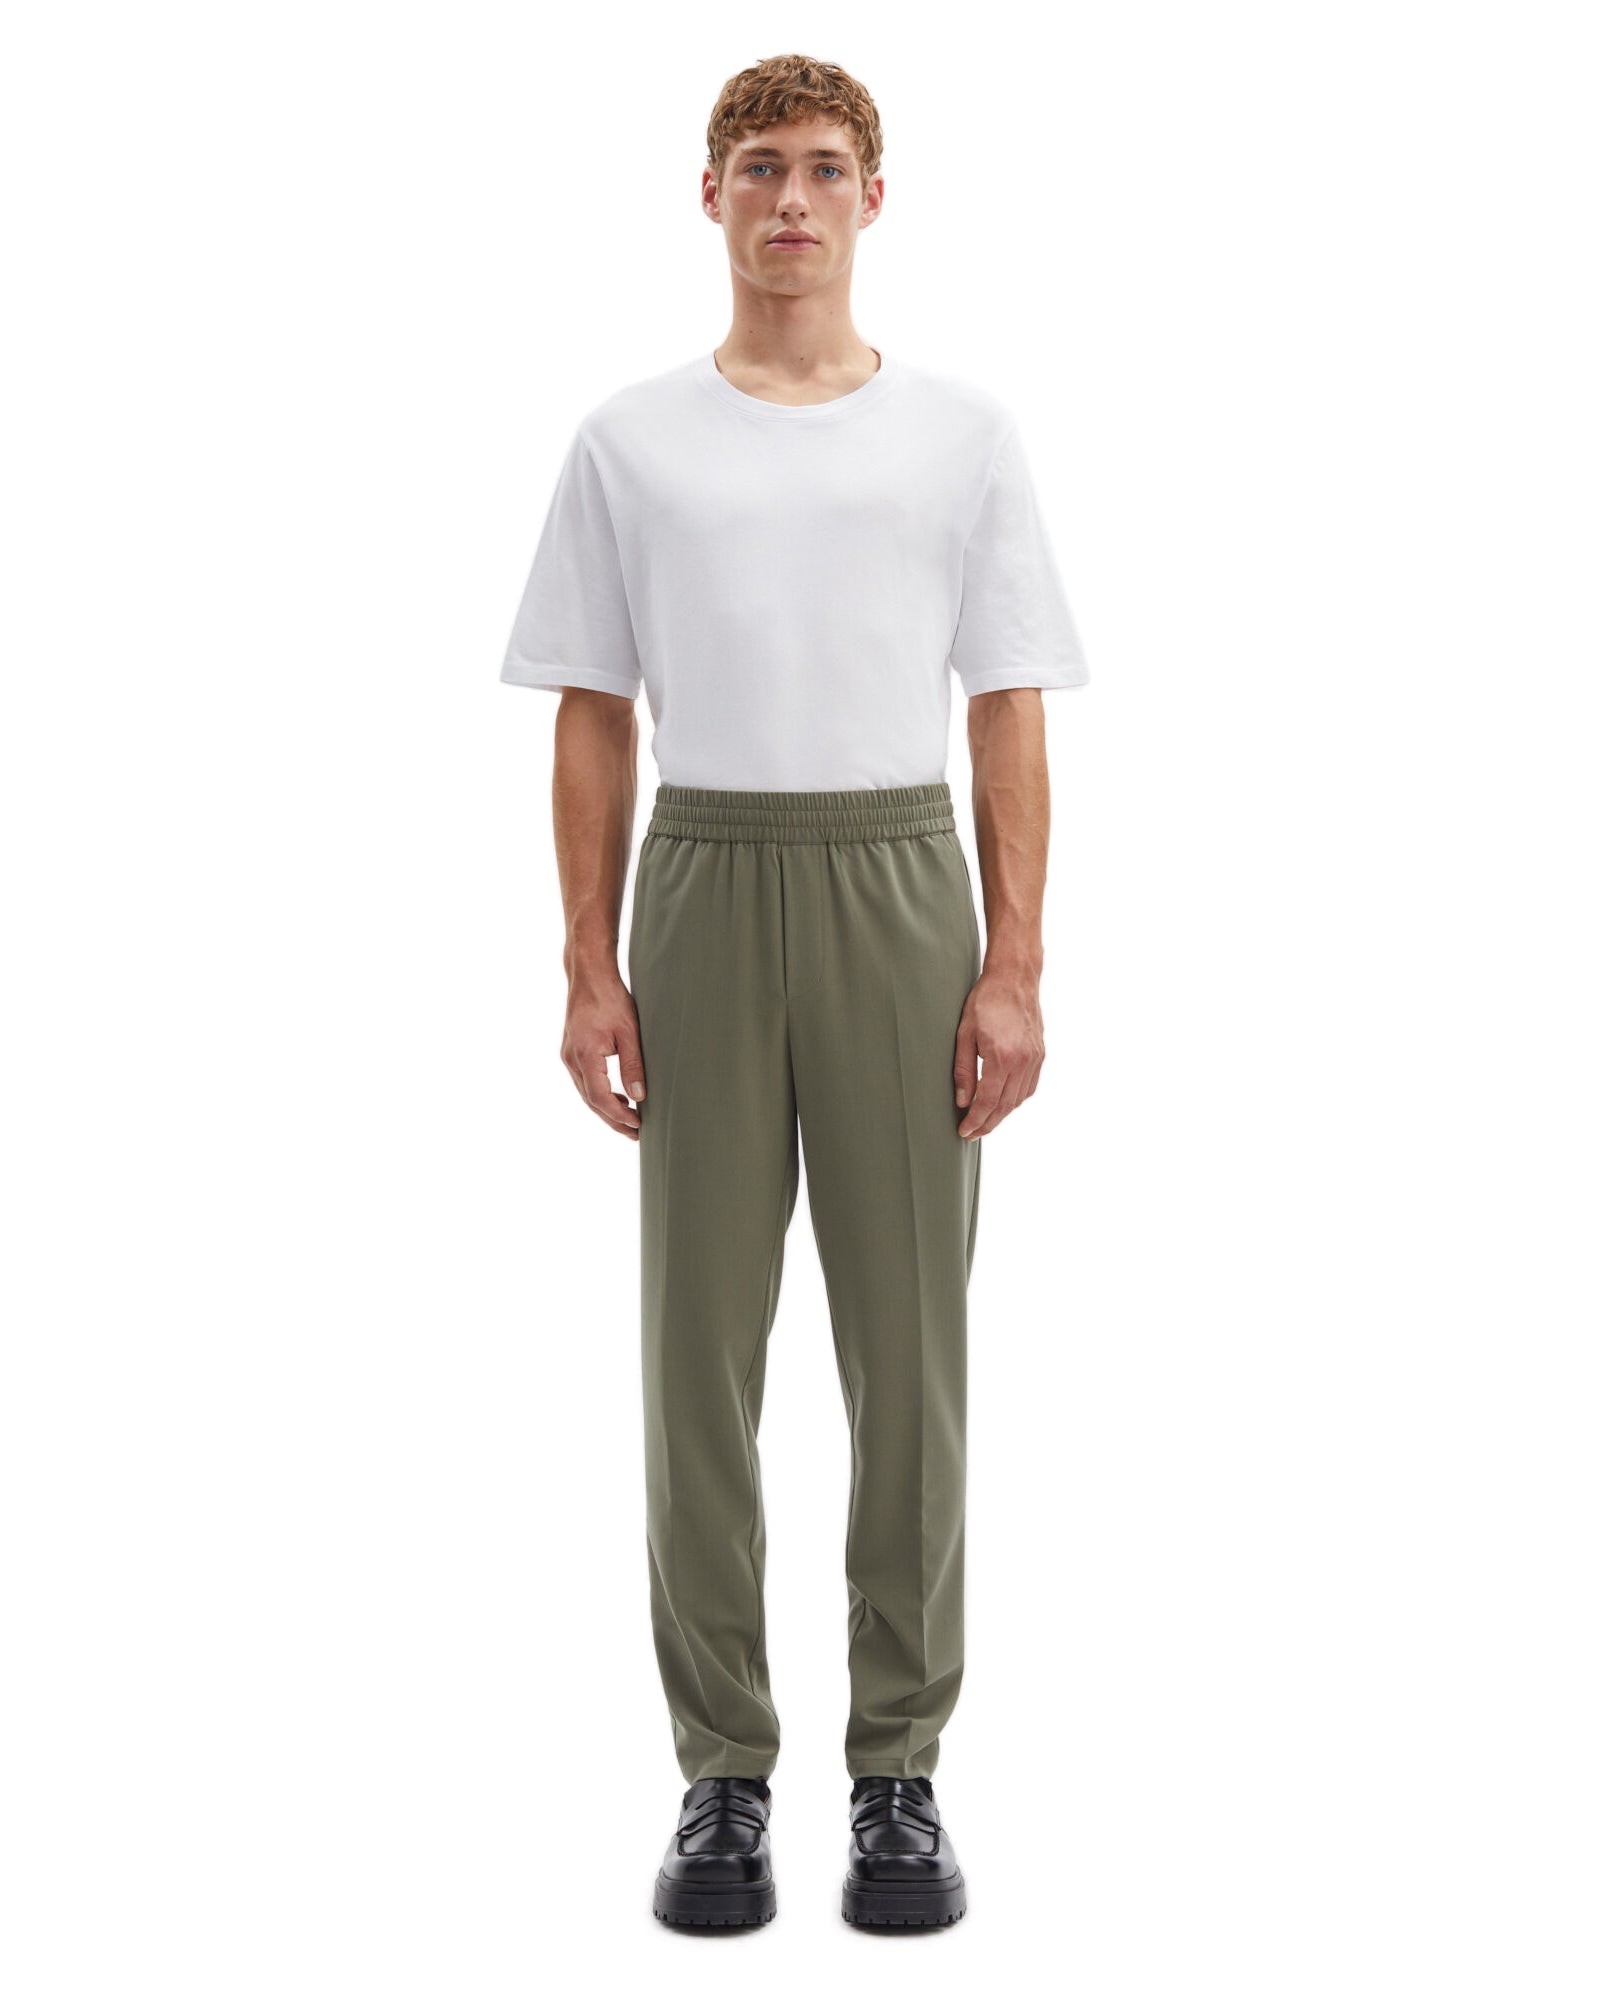 Pantalón Smithy Trousers 10821 - Dusty Olive